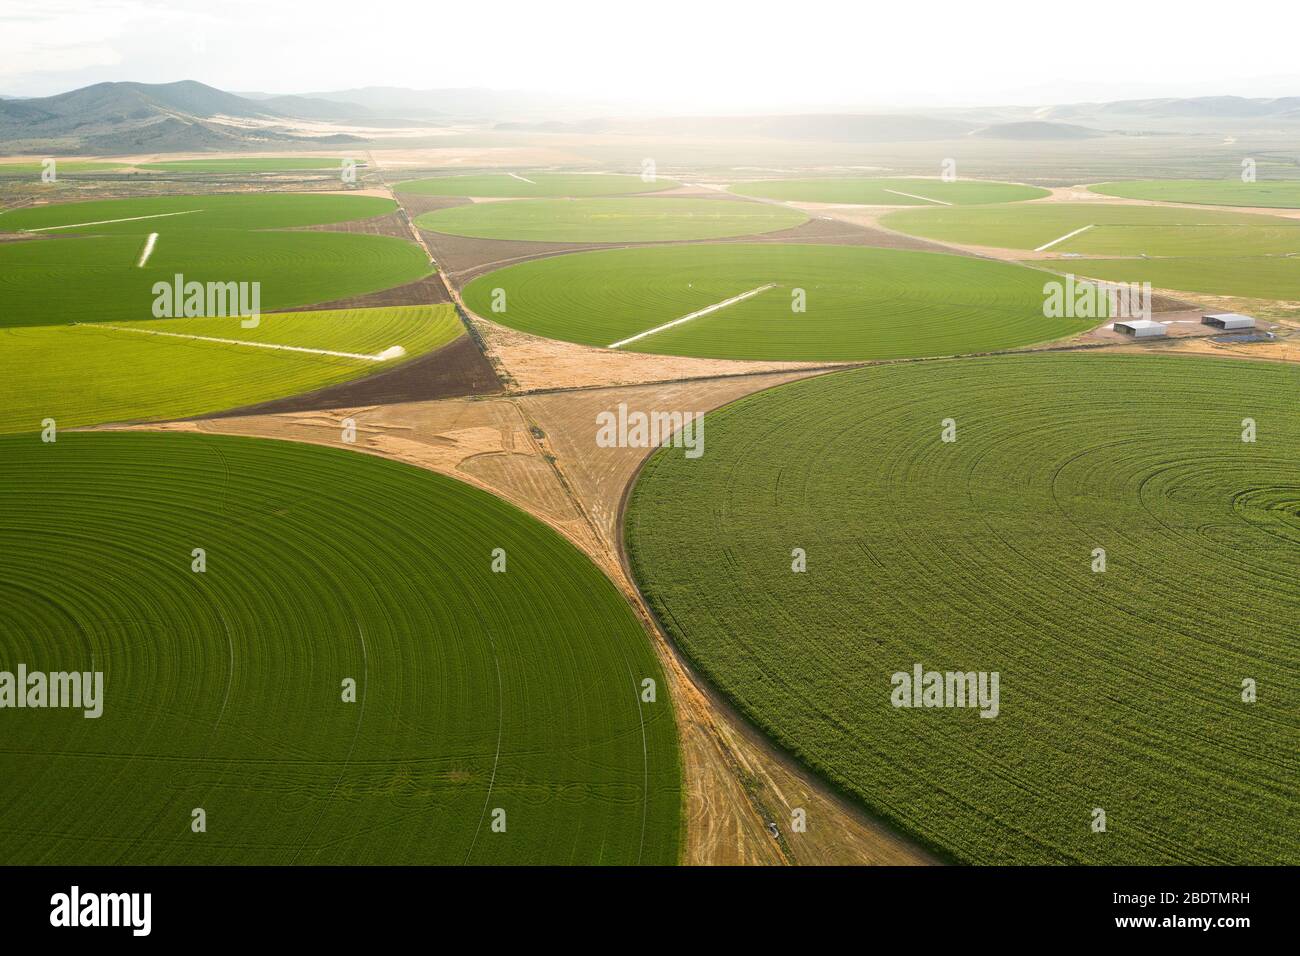 Green Crop Circles Grow in a Remove Nevada Desert Stock Photo